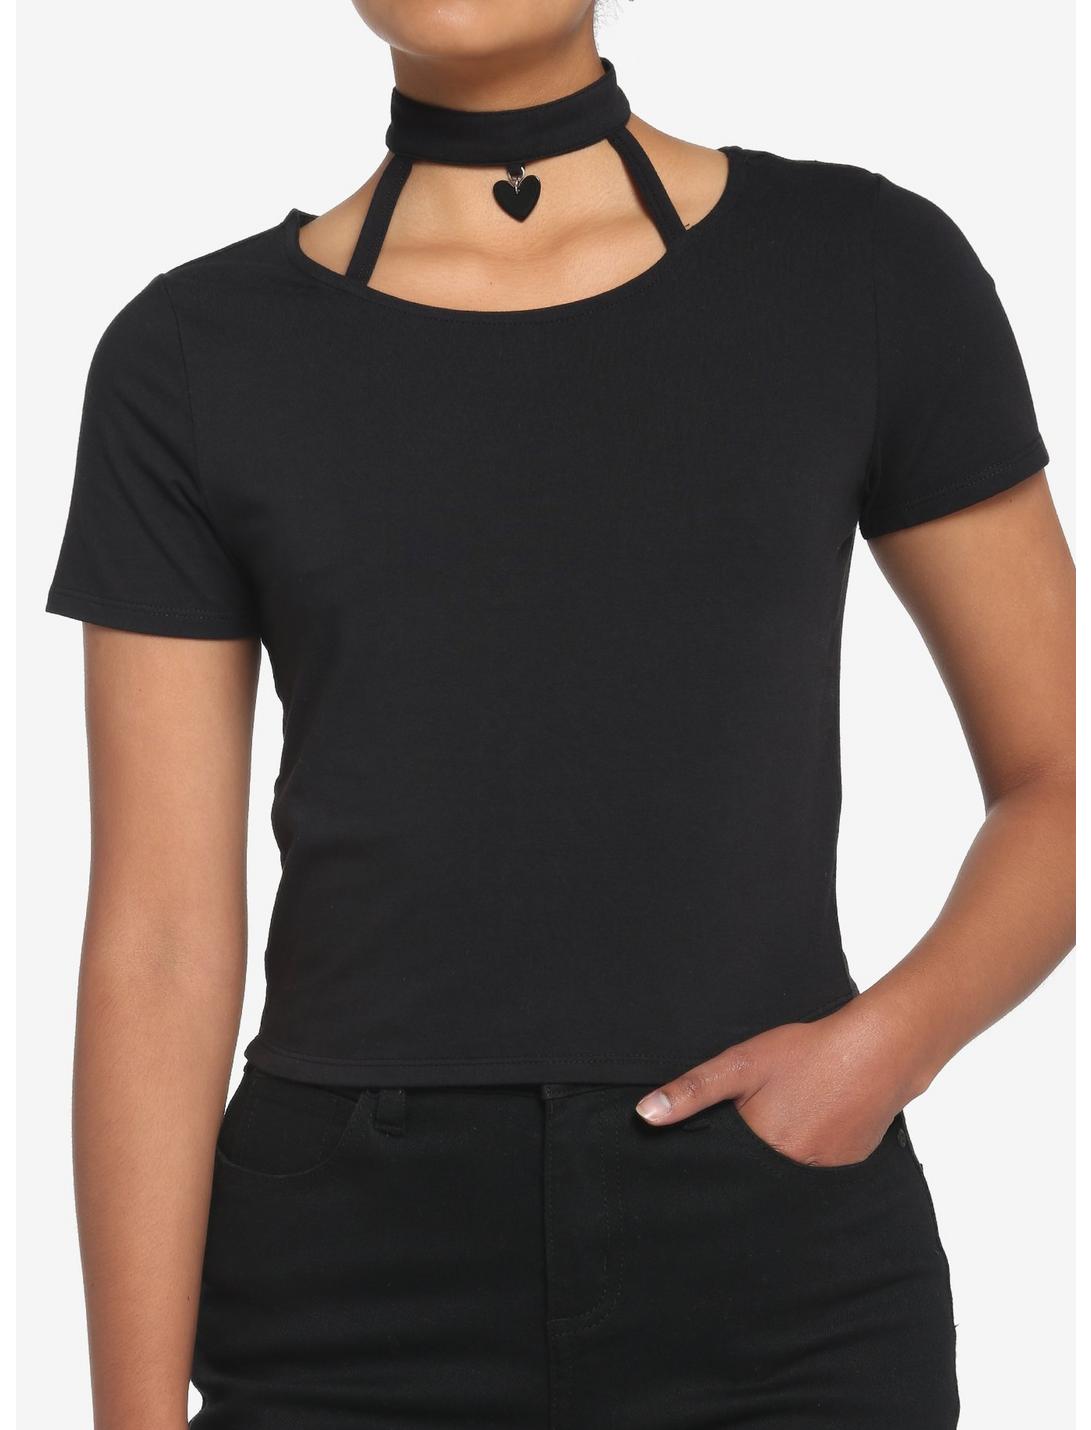 Black Heart Choker Girls Crop T-Shirt, BLACK, hi-res